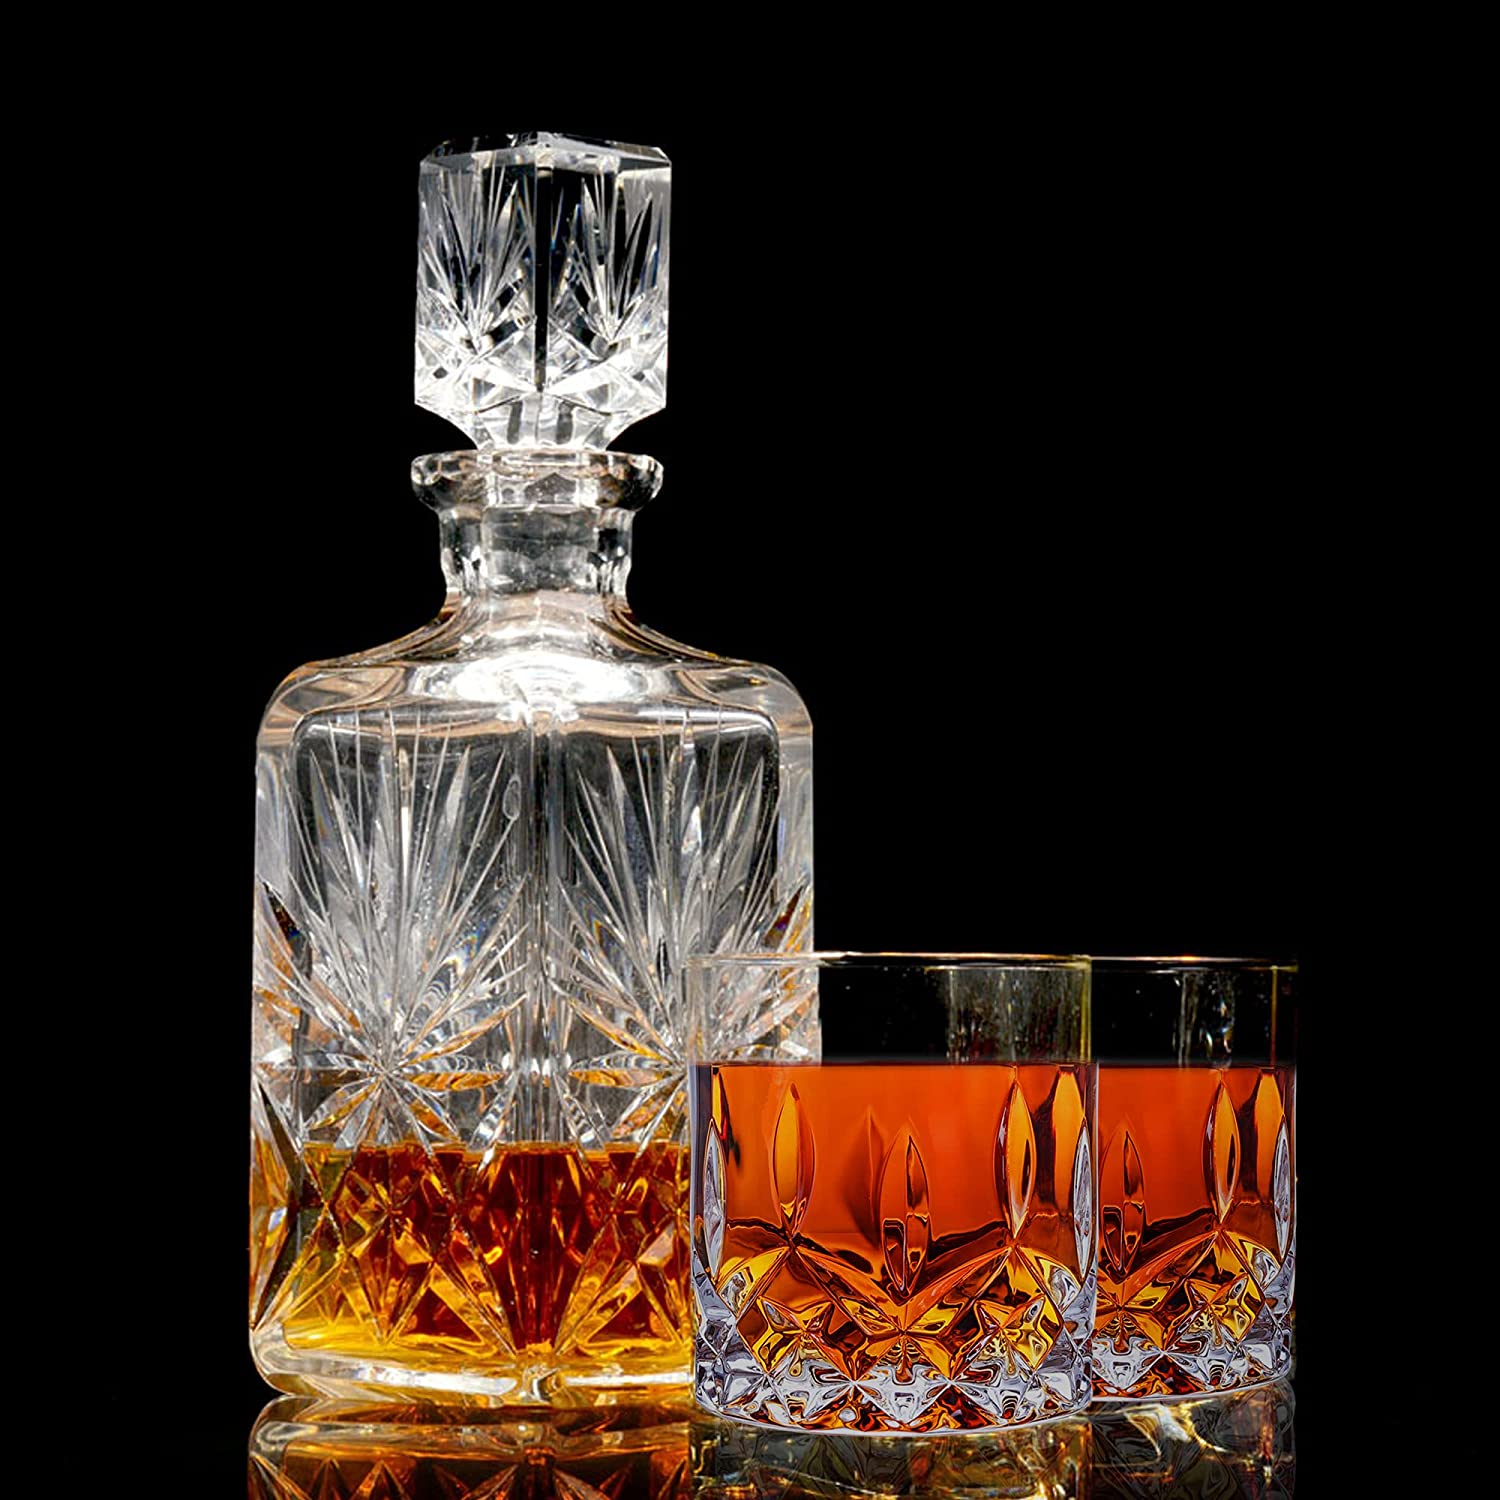 QUMMFA Whiskey Glasses, Set of 8 Cocktail Glasses, 10 OZ Old Fashioned Glasses for Drinking Scotch Bourbon Cognac Vodka Gin Tequila Rum Liquor Rye, Rocks Glasses, Crystal Scotch Glasses